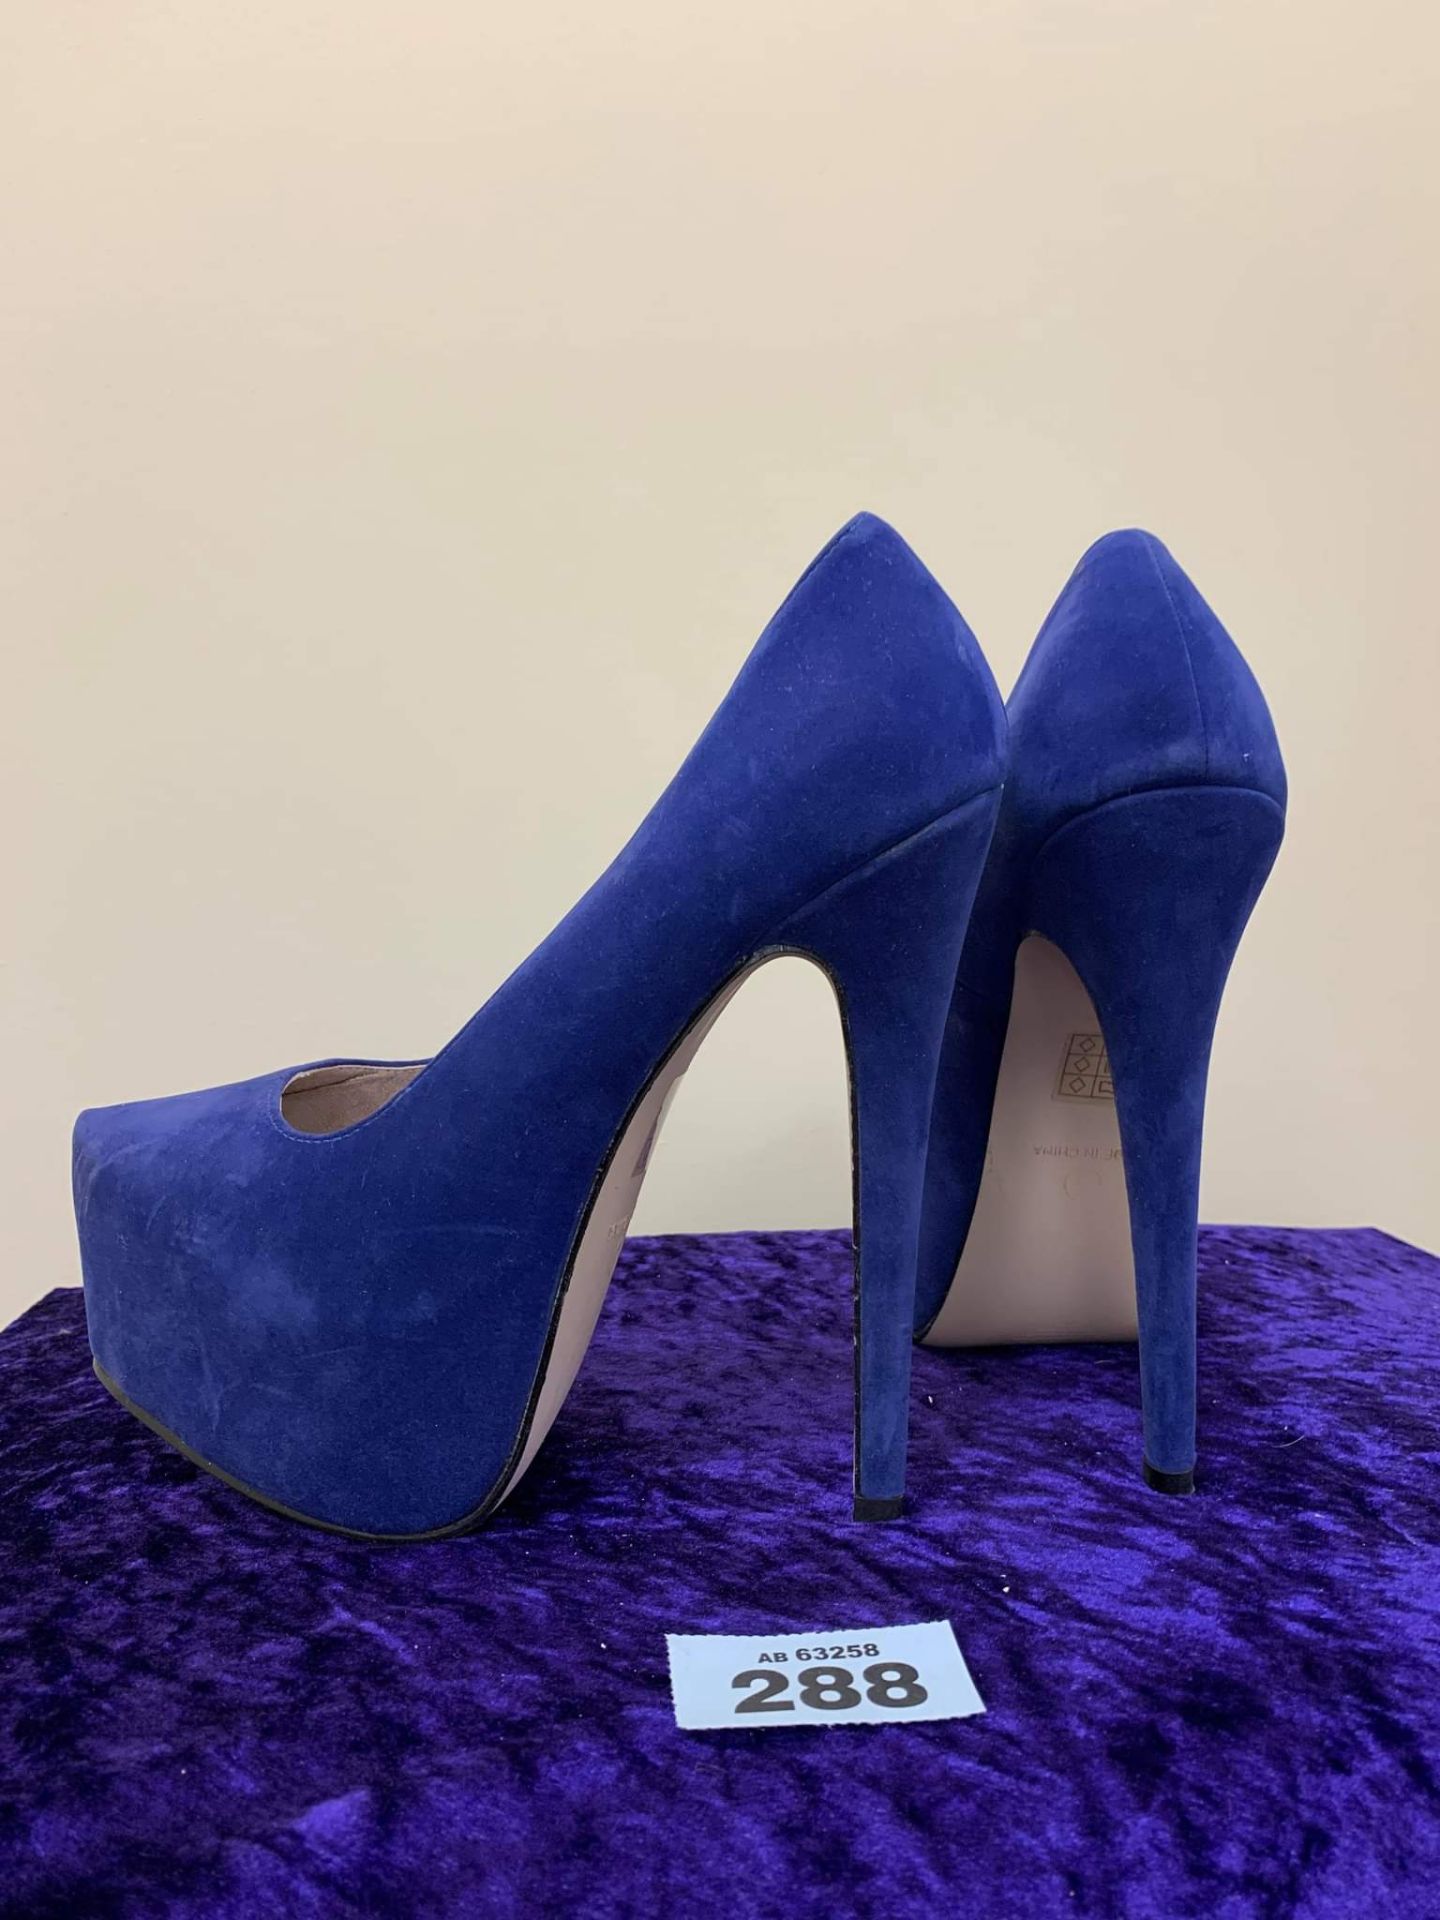 Shoes Cobalt Blue Size 7 - Image 2 of 4